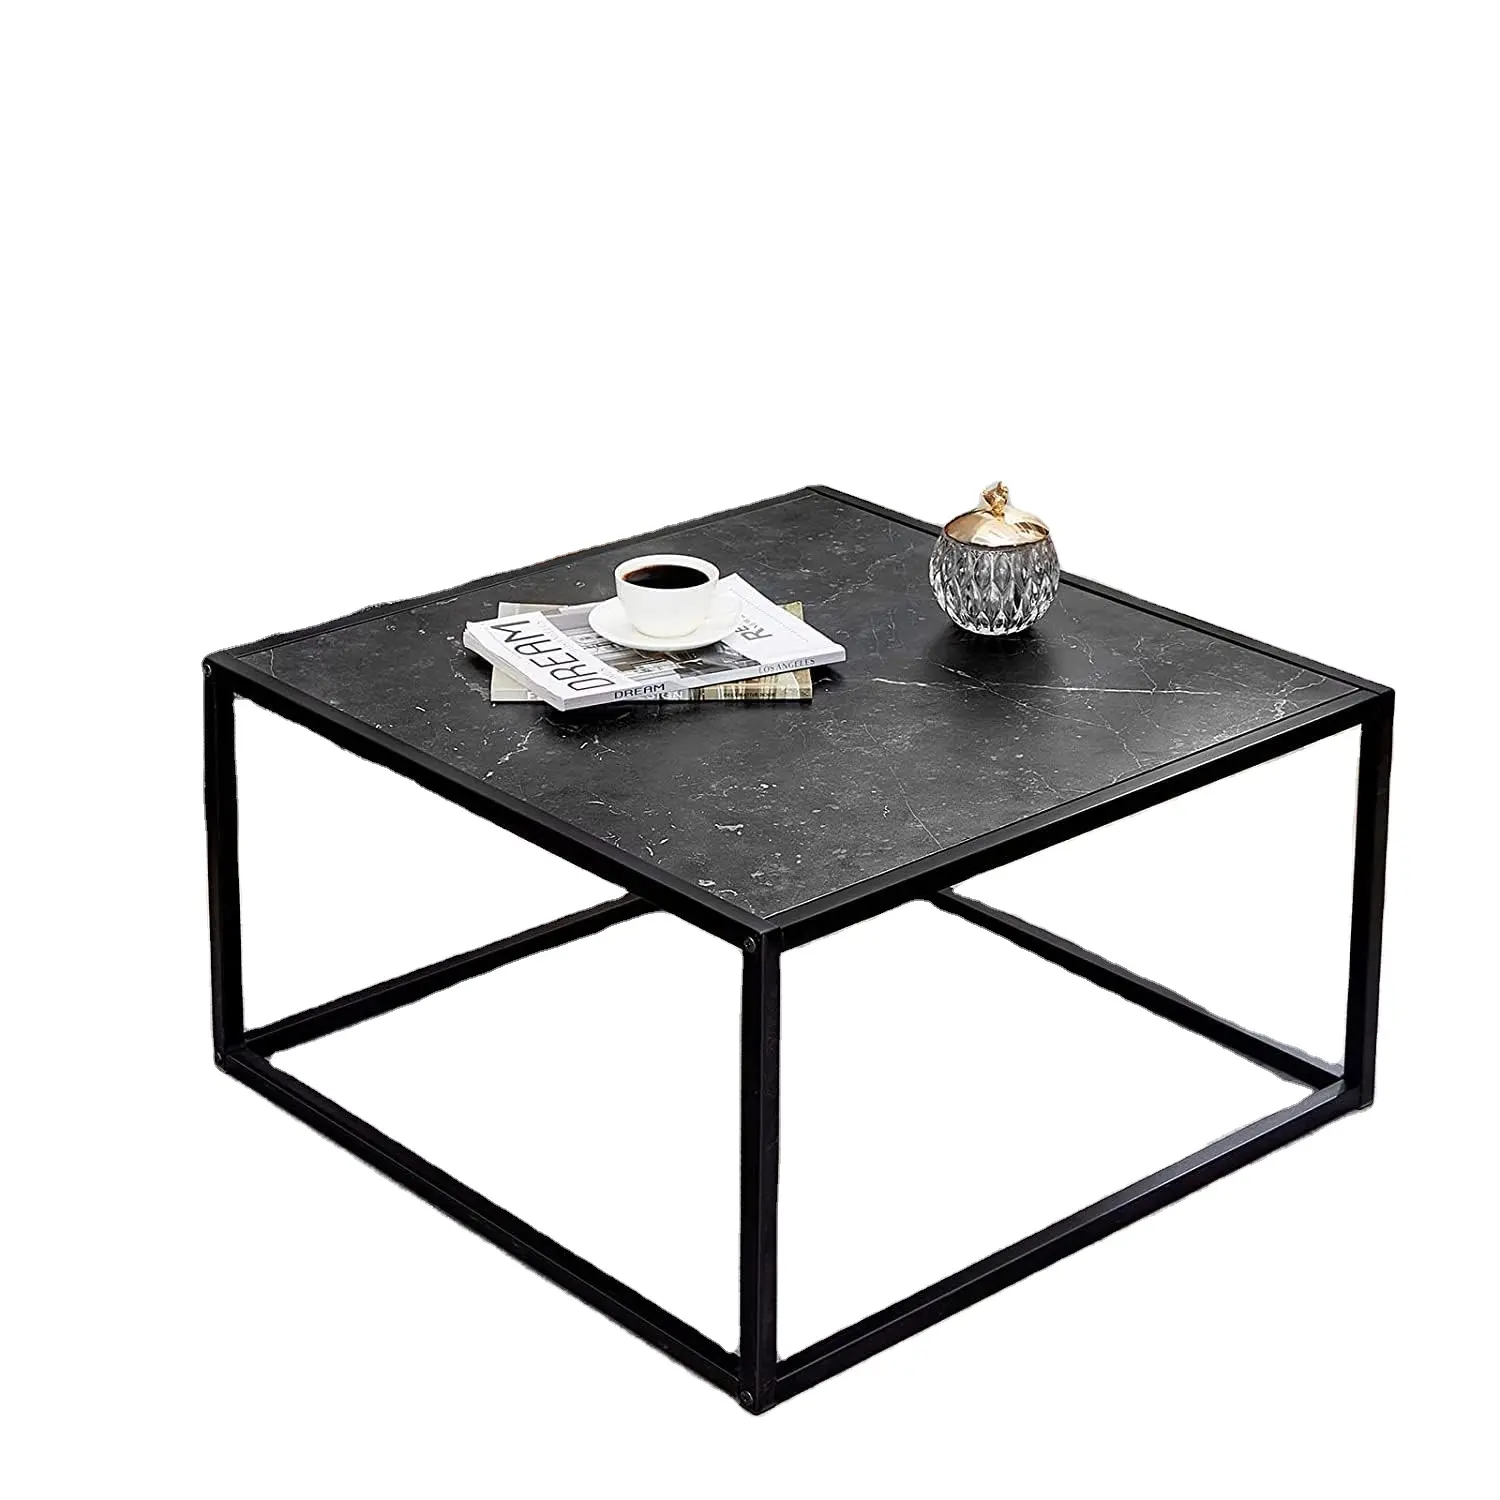 Siyah sehpa, küçük kare sehpa, minimalist modern yemek masası